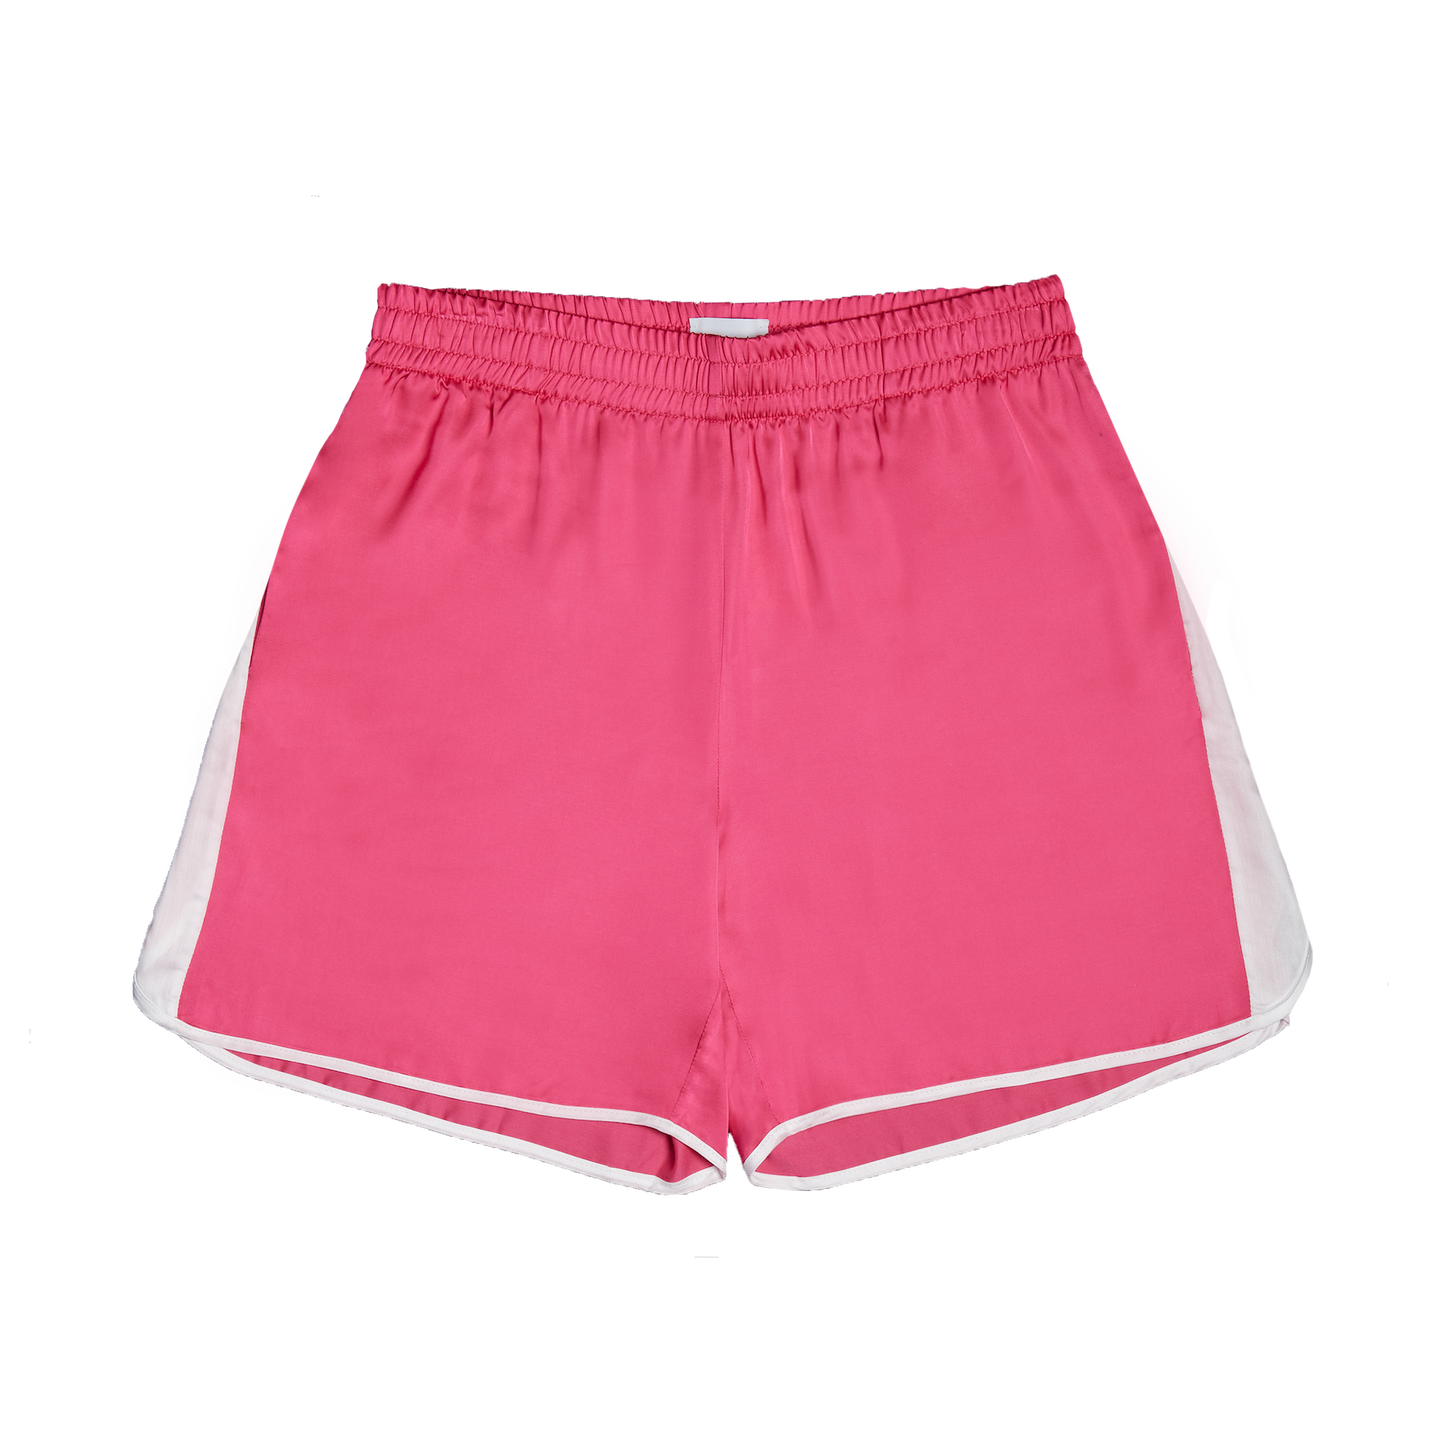 Waiter Shorts - Pink